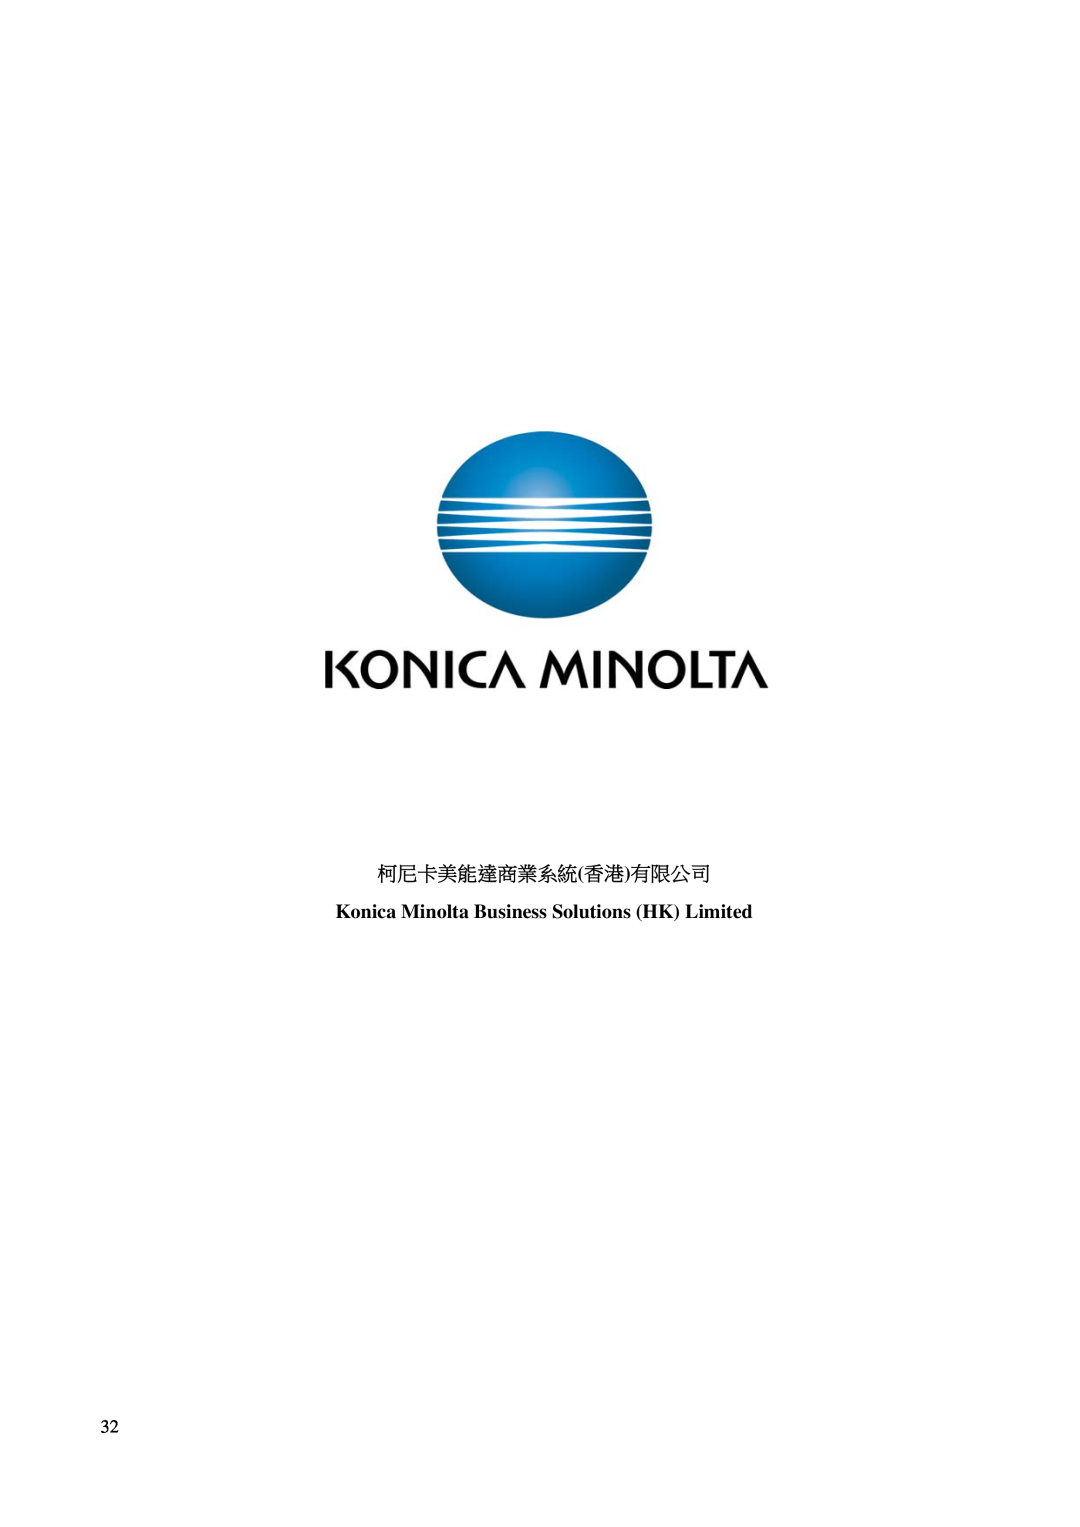 Konica Minolta C552, C452 manual 柯尼卡美能達商業系統香港有限公司, Konica Minolta Business Solutions HK Limited 